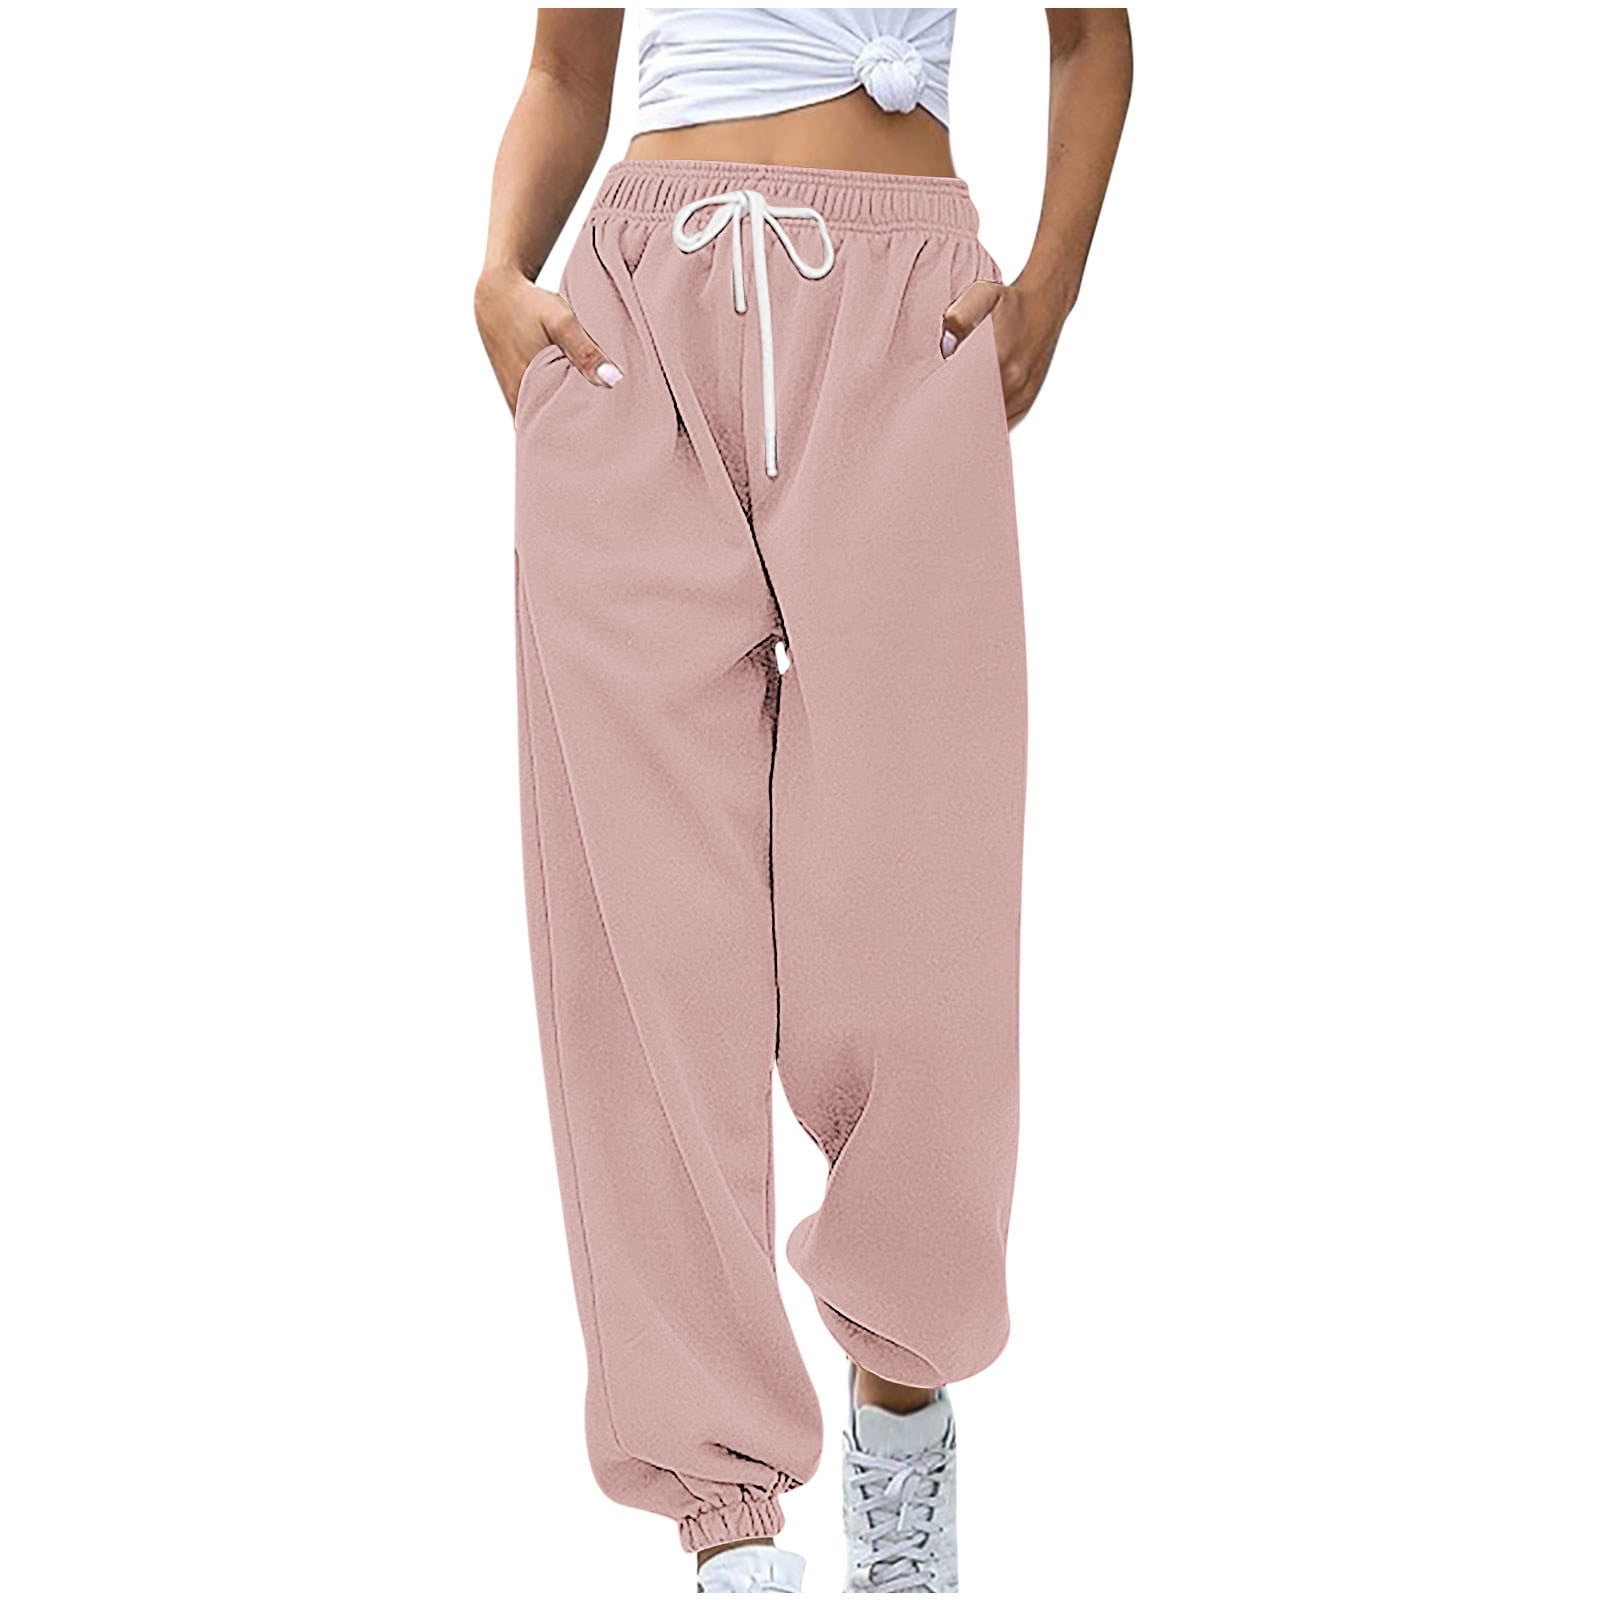 VSSSJ Women's Casual Sweatpants Regular Fit Solid Color Lace-Up Elastic ...